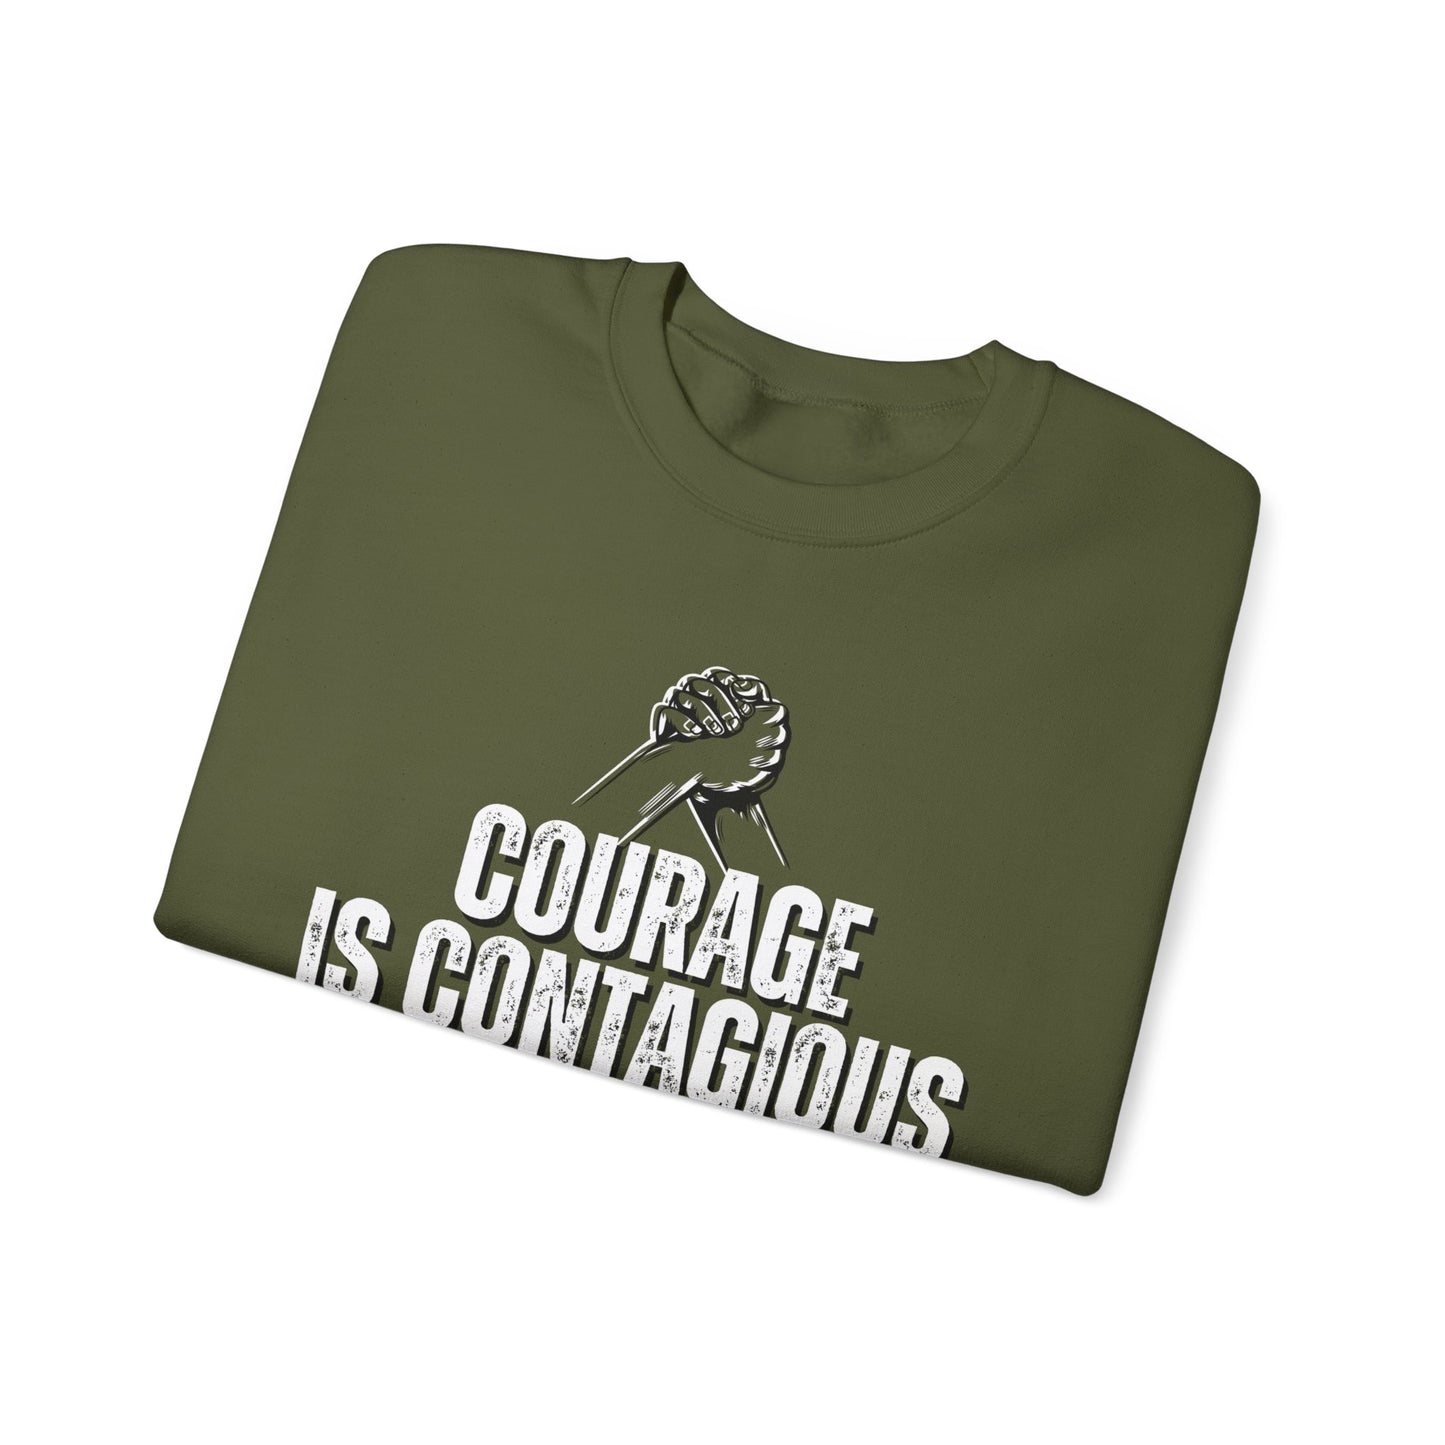 INSPIRED Men Courage Is Contagious Unisex Heavy Blend Crewneck Sweatshirt